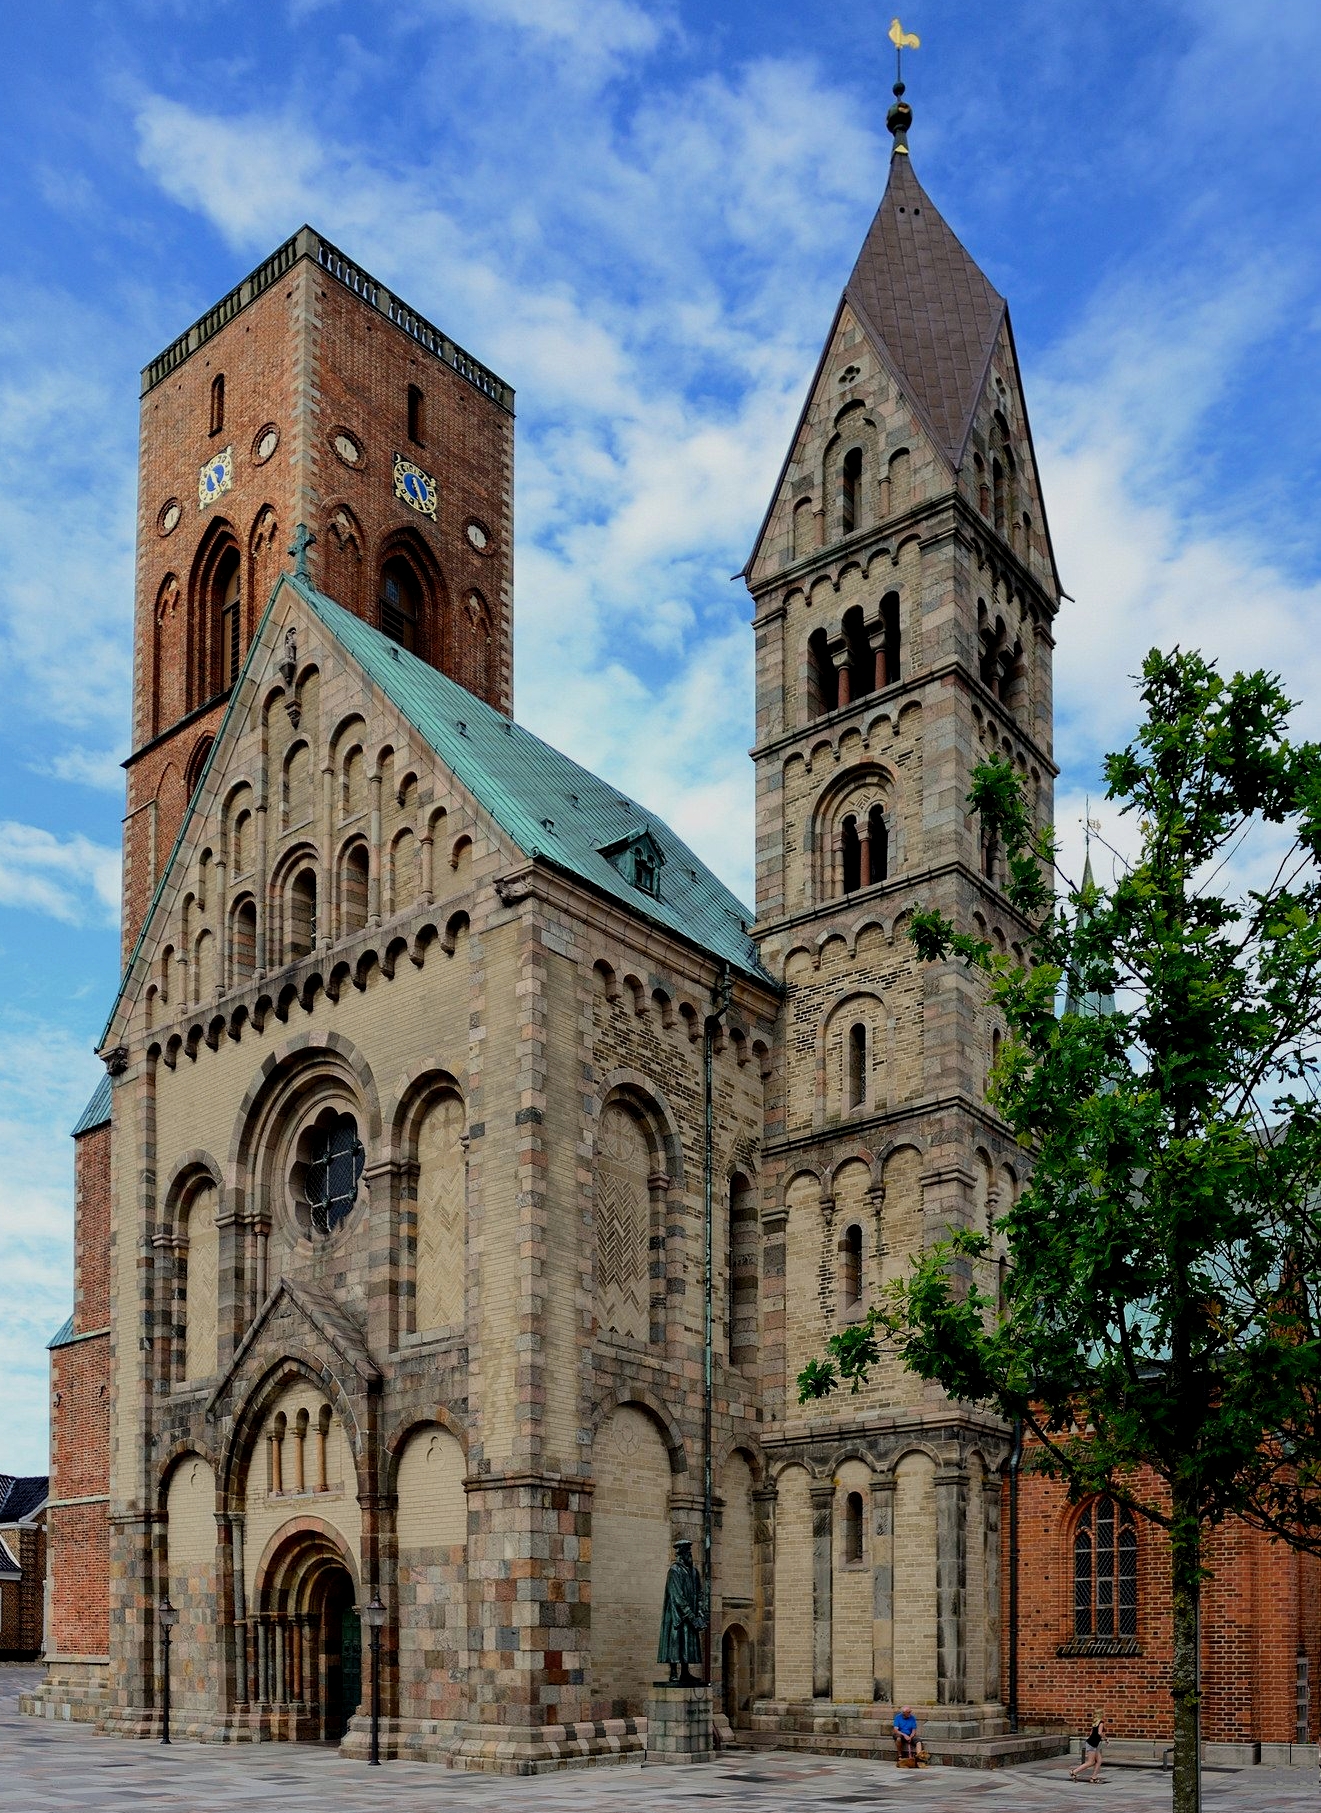 Ribe cathedral